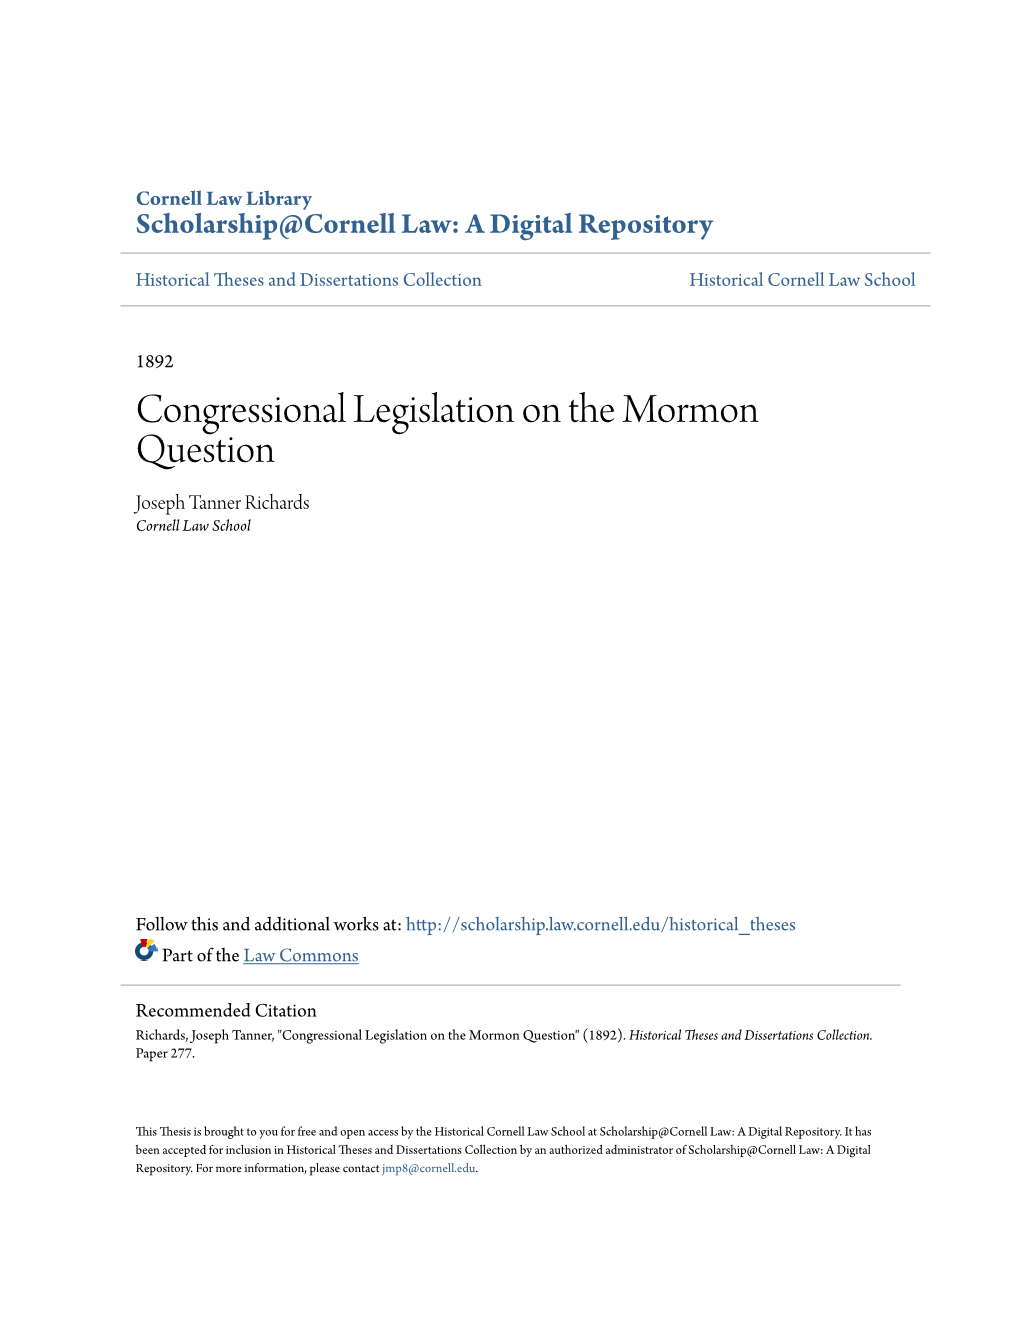 Congressional Legislation on the Mormon Question Joseph Tanner Richards Cornell Law School